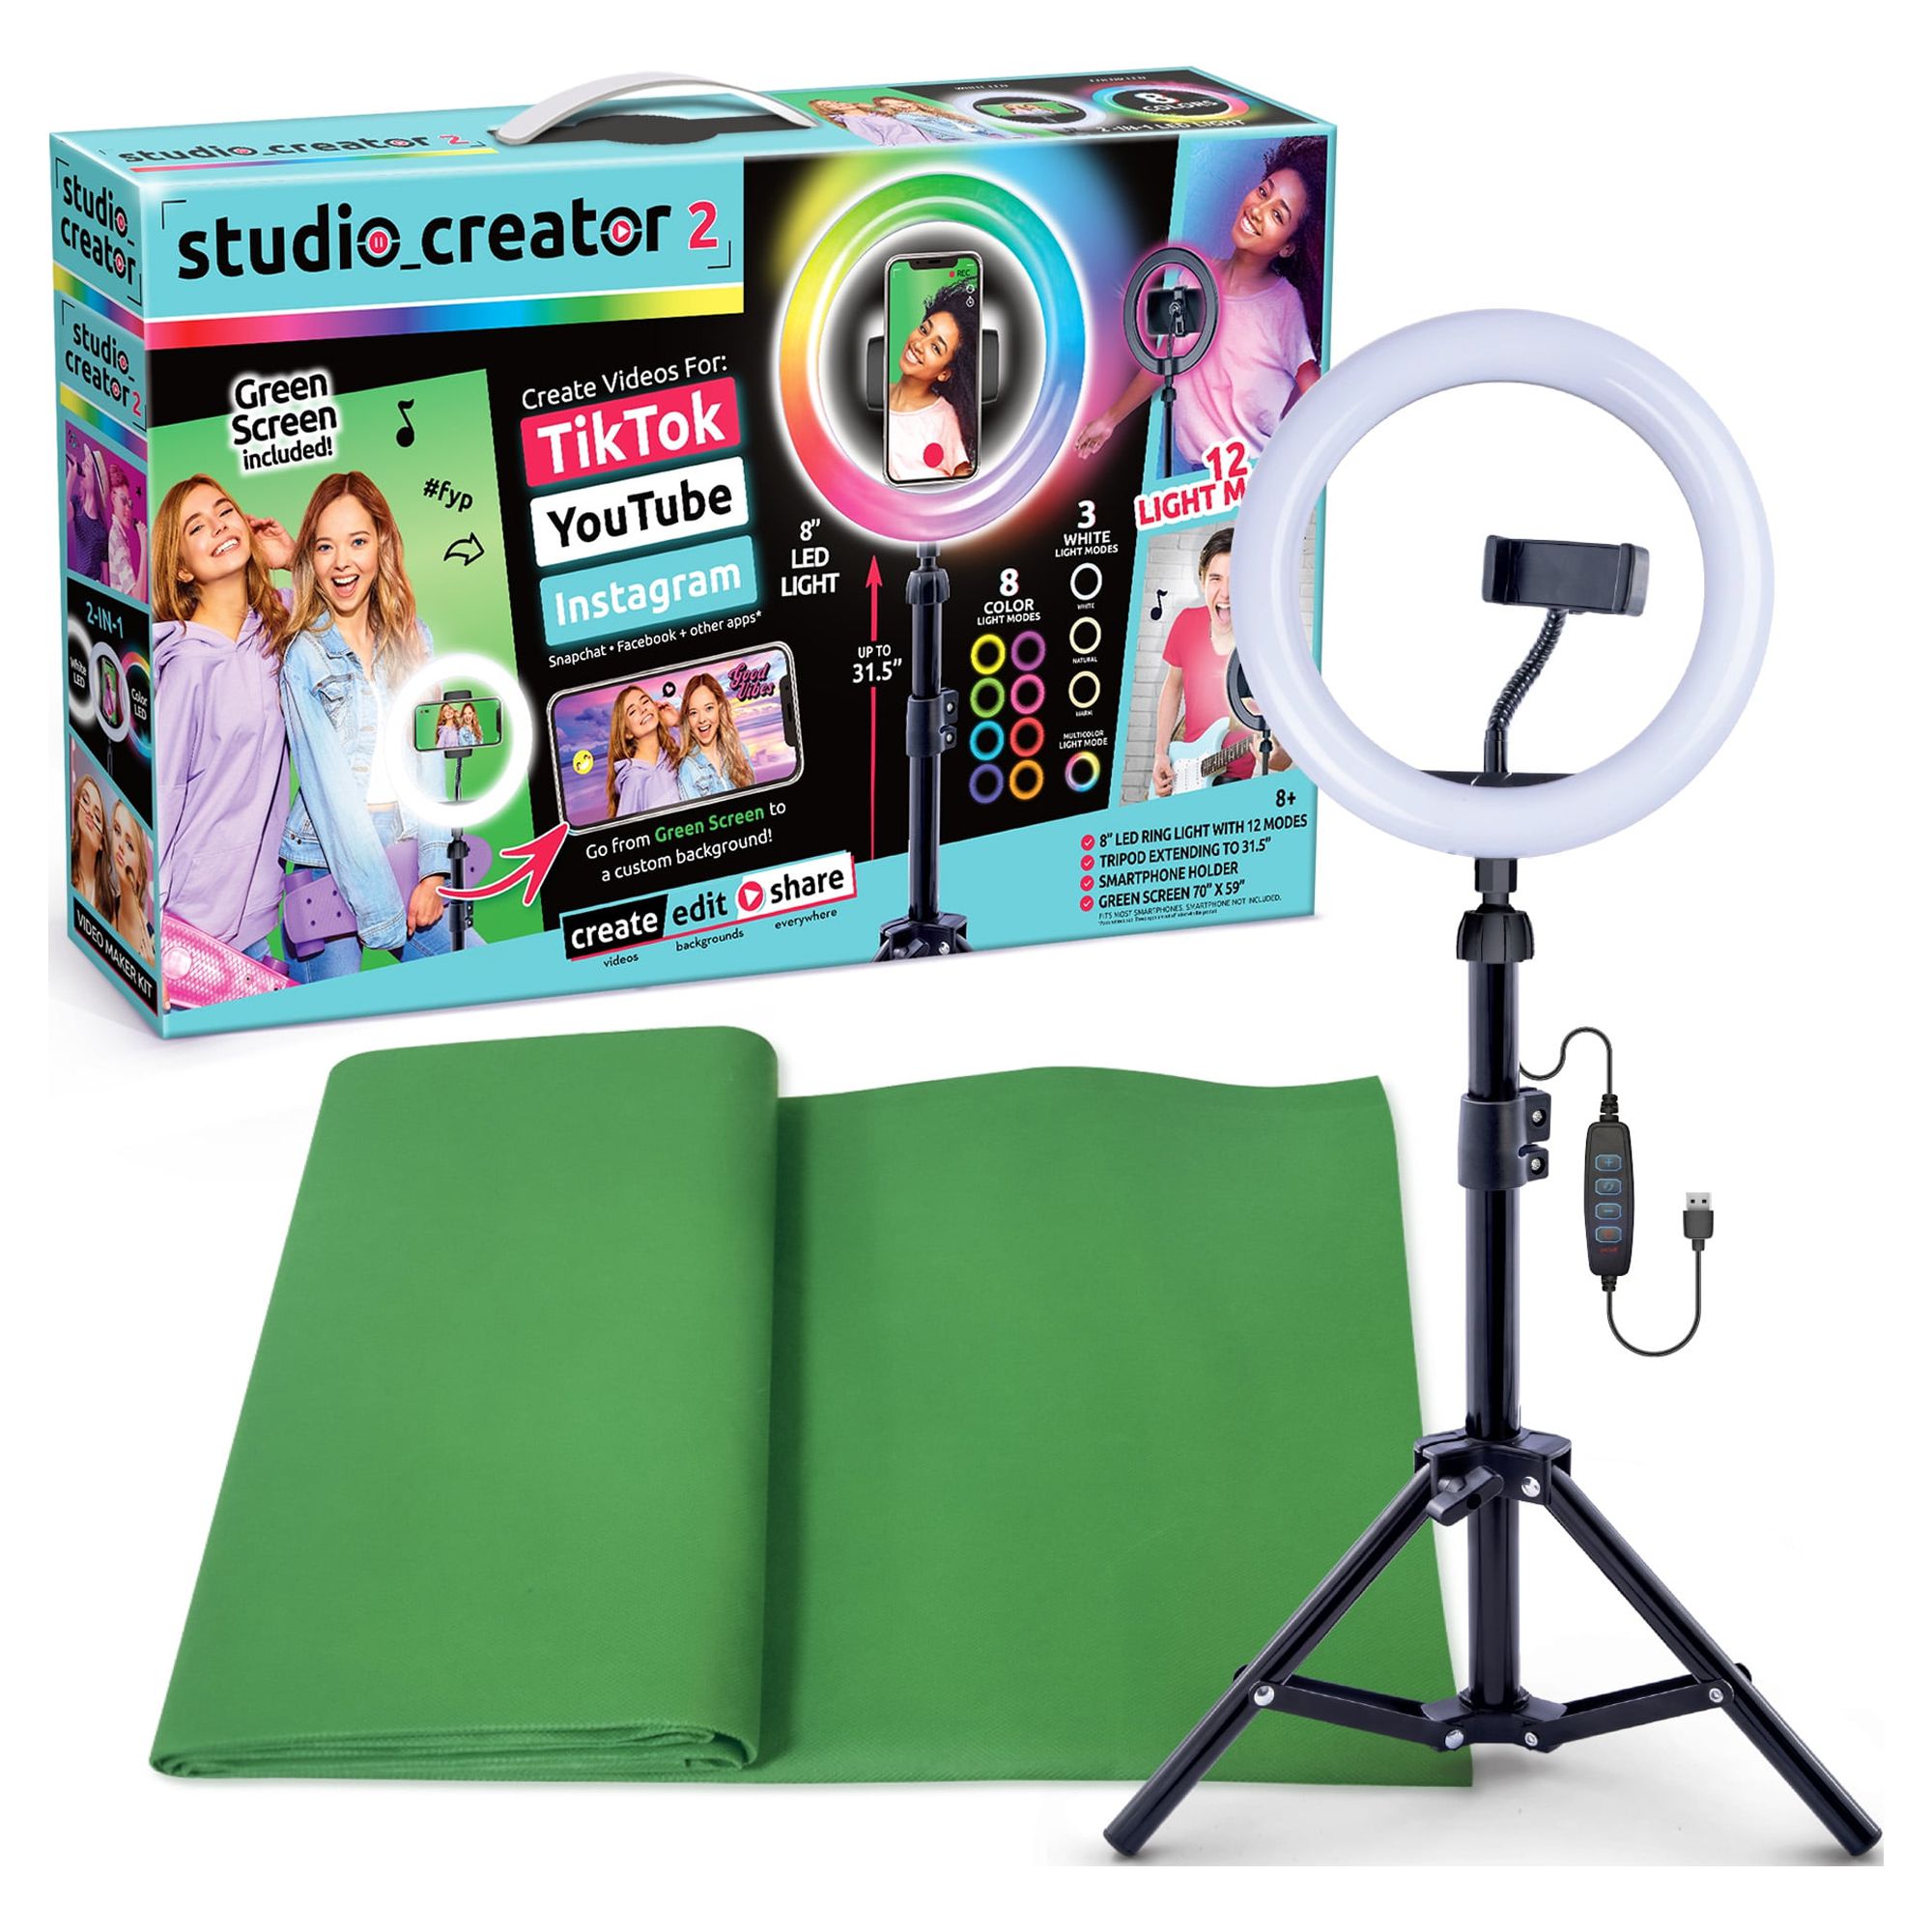 Studio Creator 2: Video Maker Kit-Multicolor Ring Light - image 1 of 7